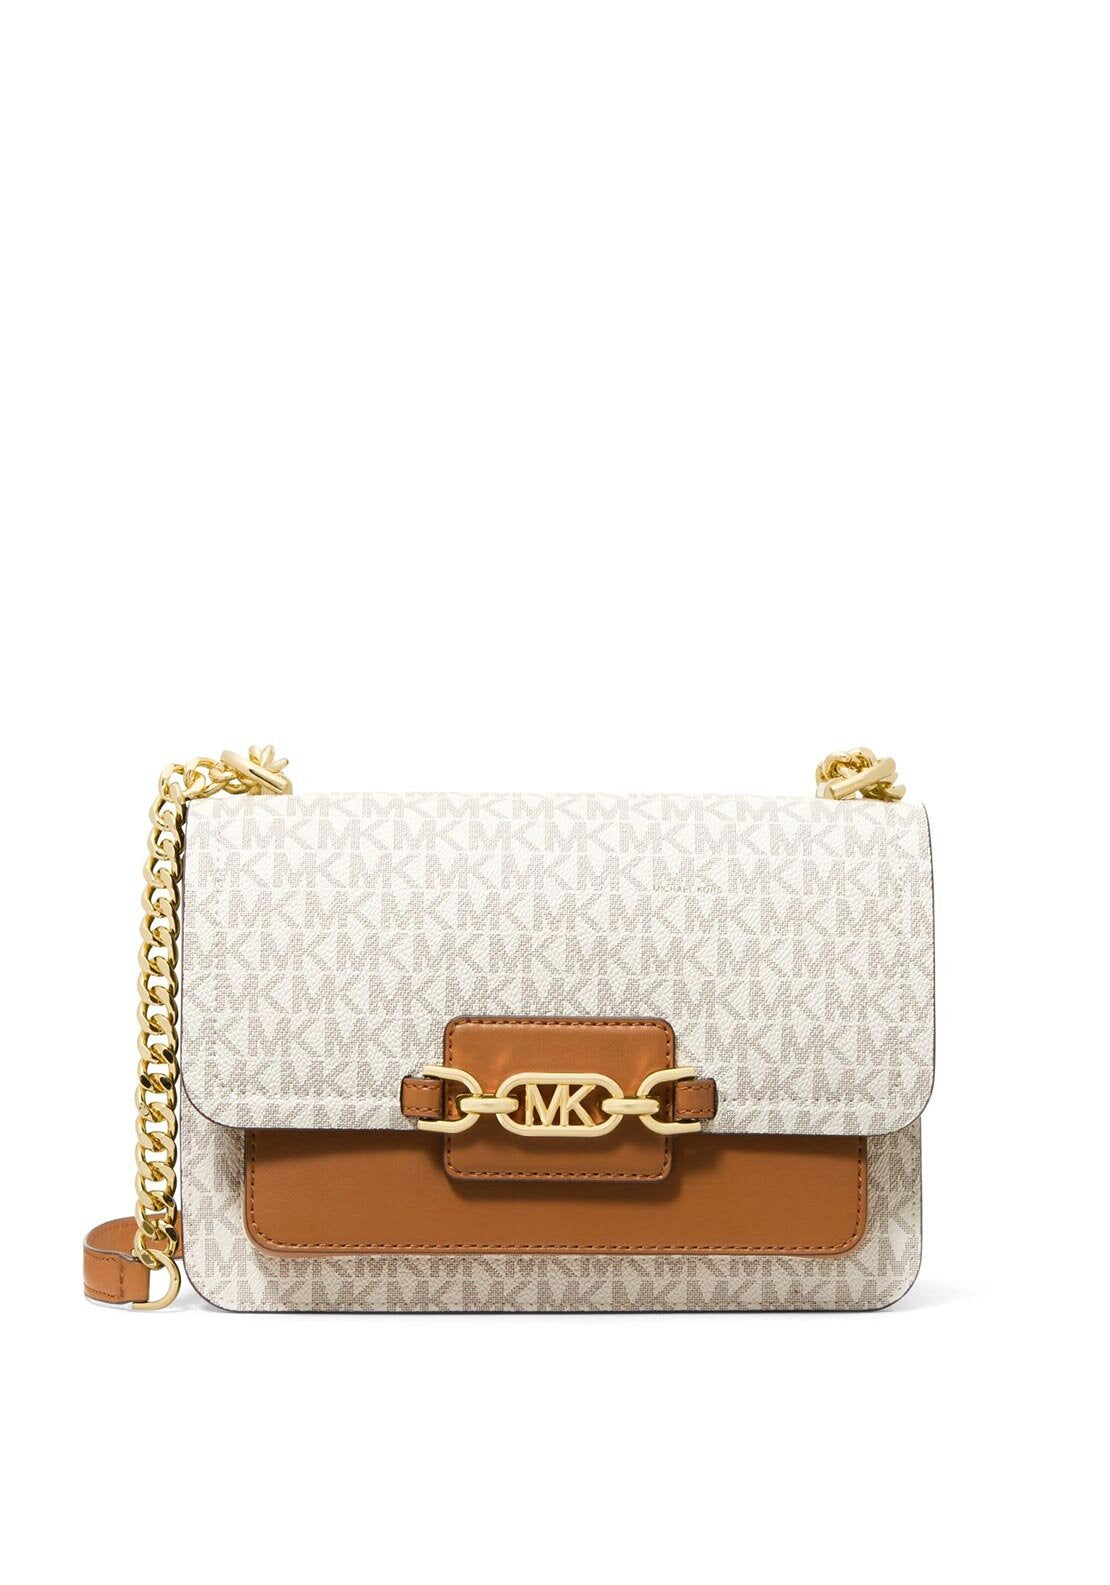 Michael Kors Handbags  Wallets, Totes & Crossbody Bags - McElhinneys